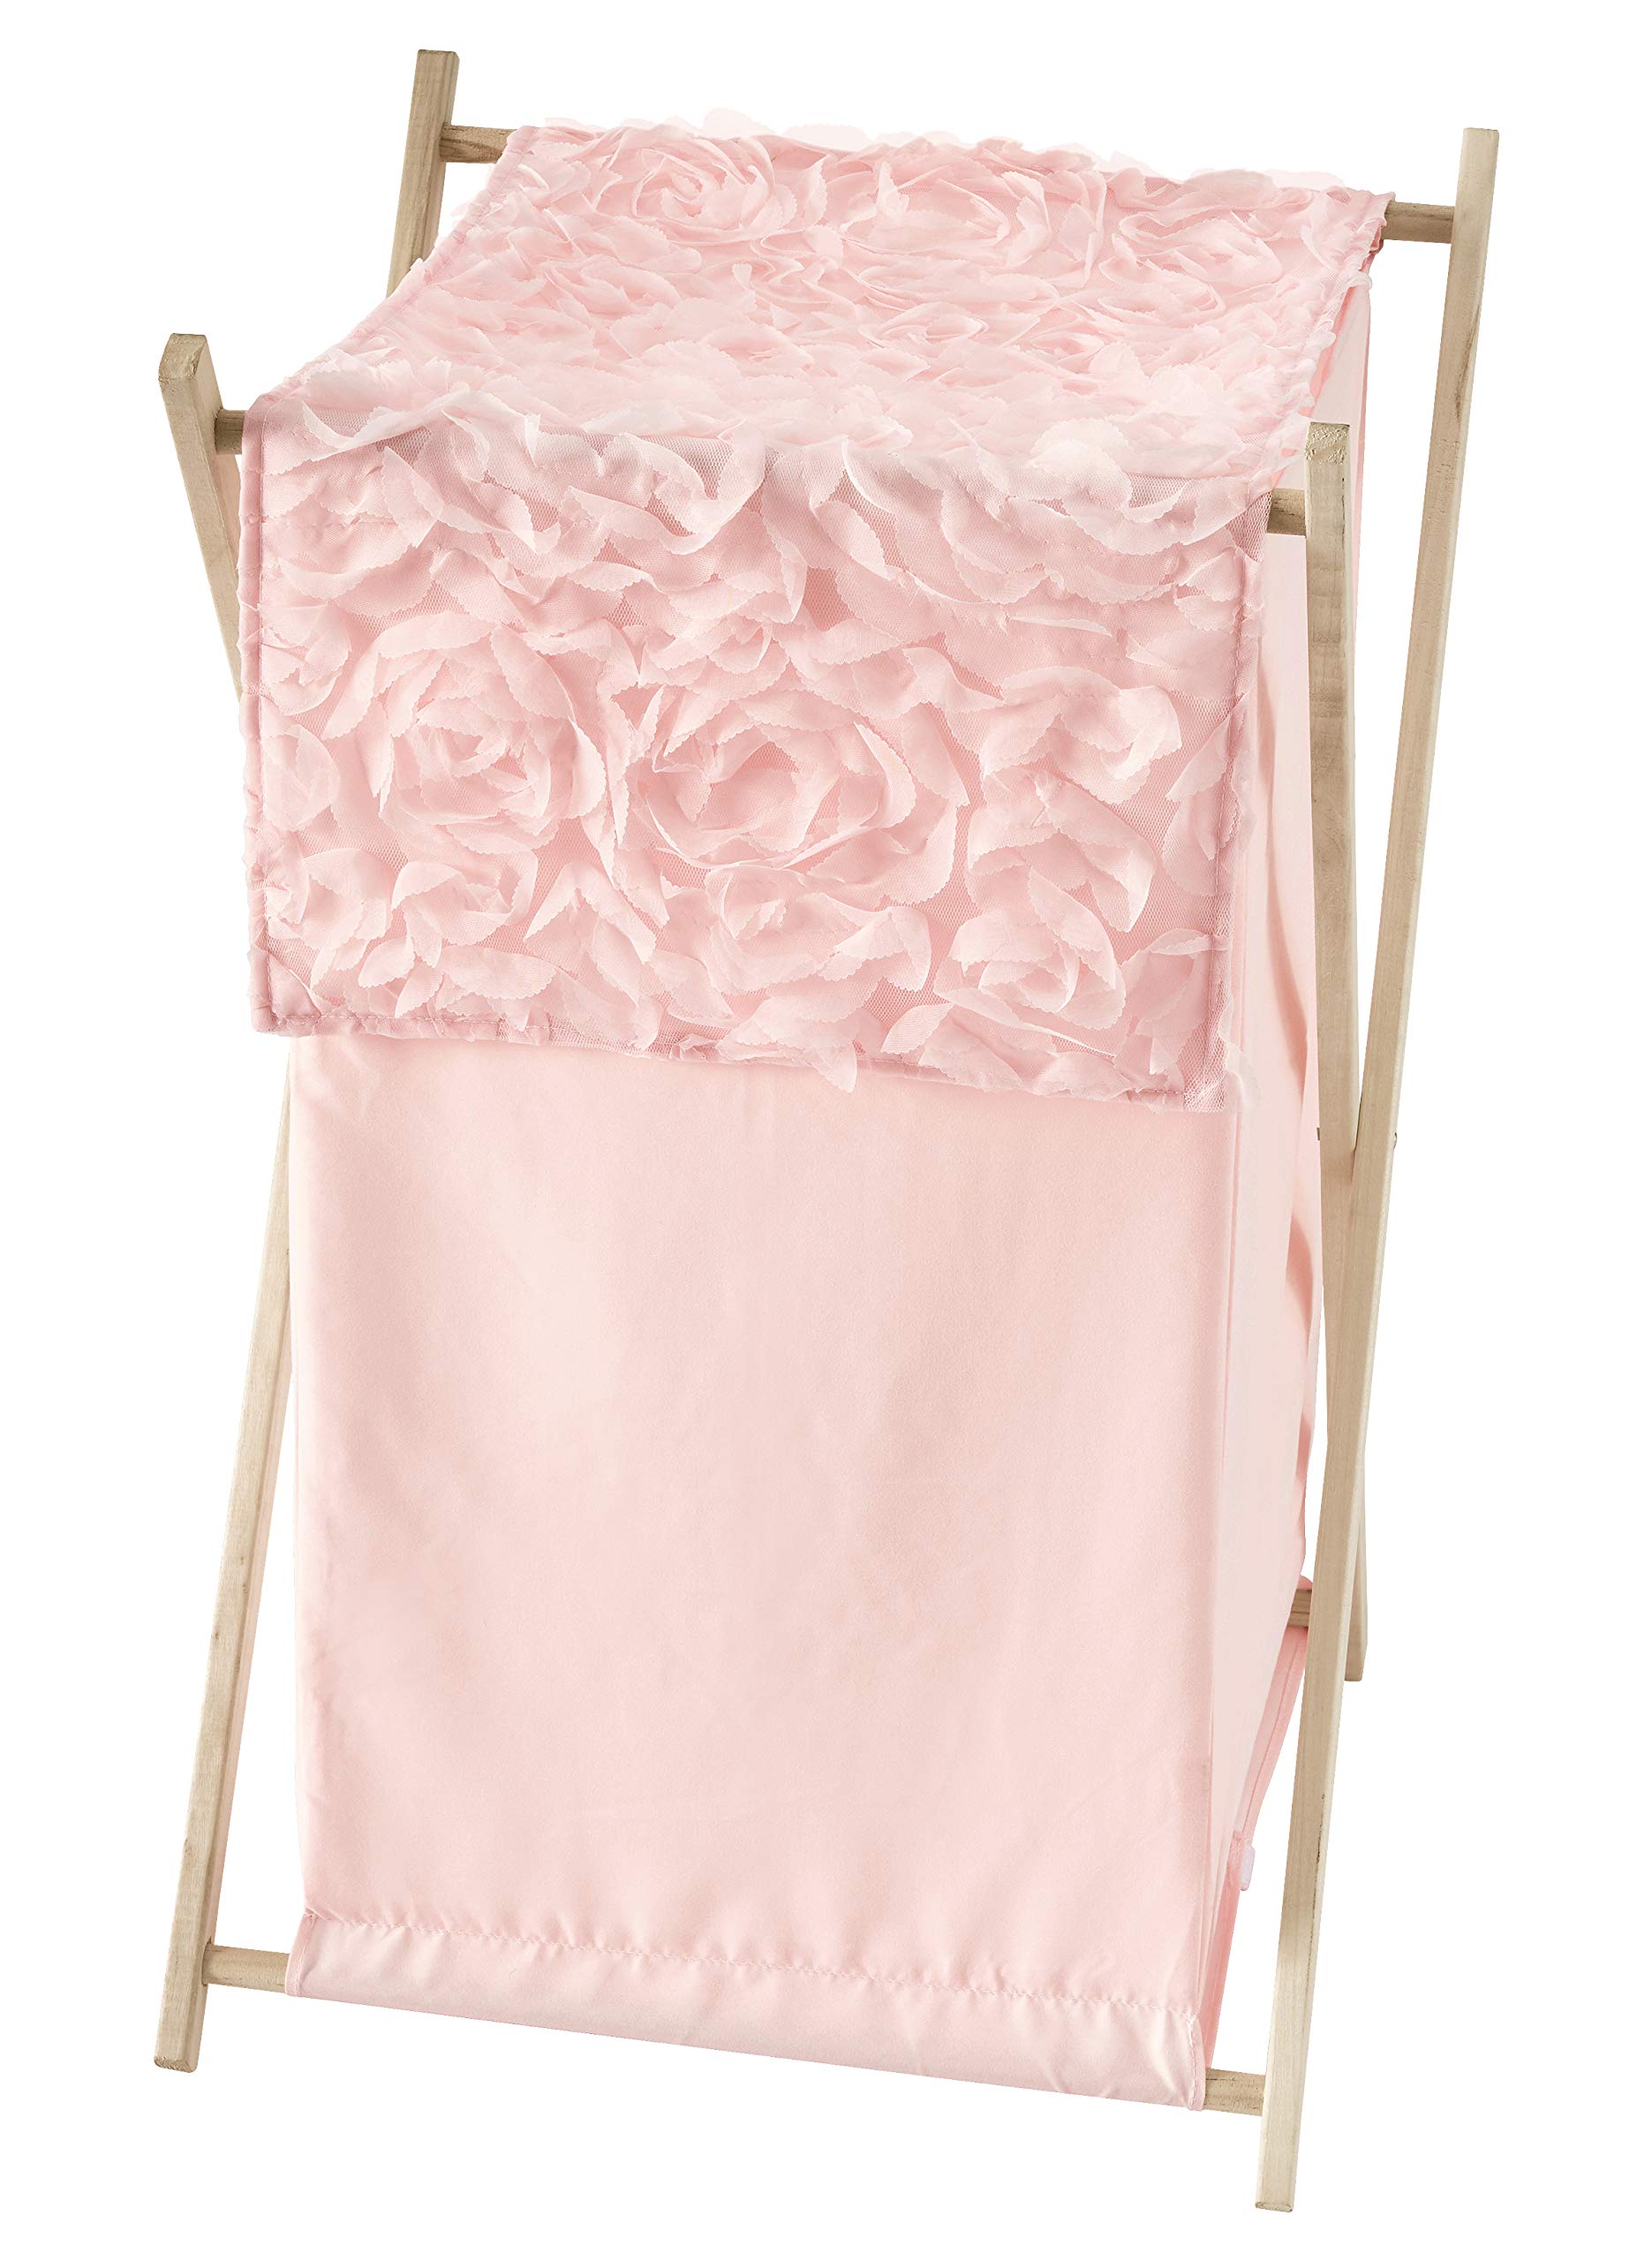 Sweet Jojo Designs Pink Floral Rose Baby Kid Clothes Laundry Hamper - Solid Light Blush Flower Luxurious Elegant Princess Vintag